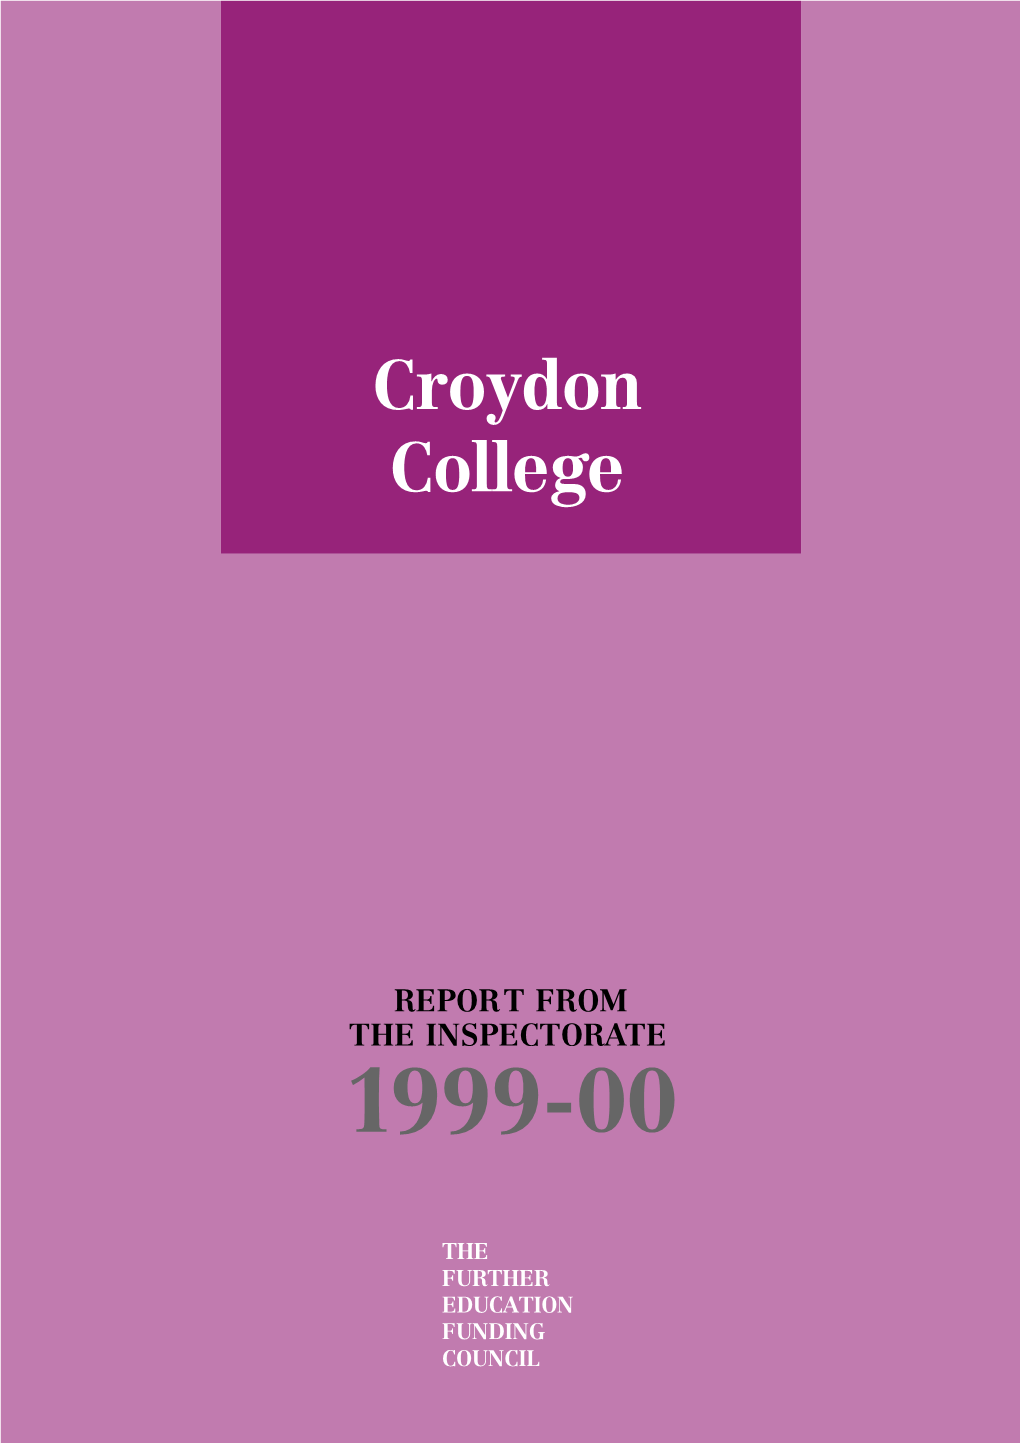 Croydon College Inspection Report 2000